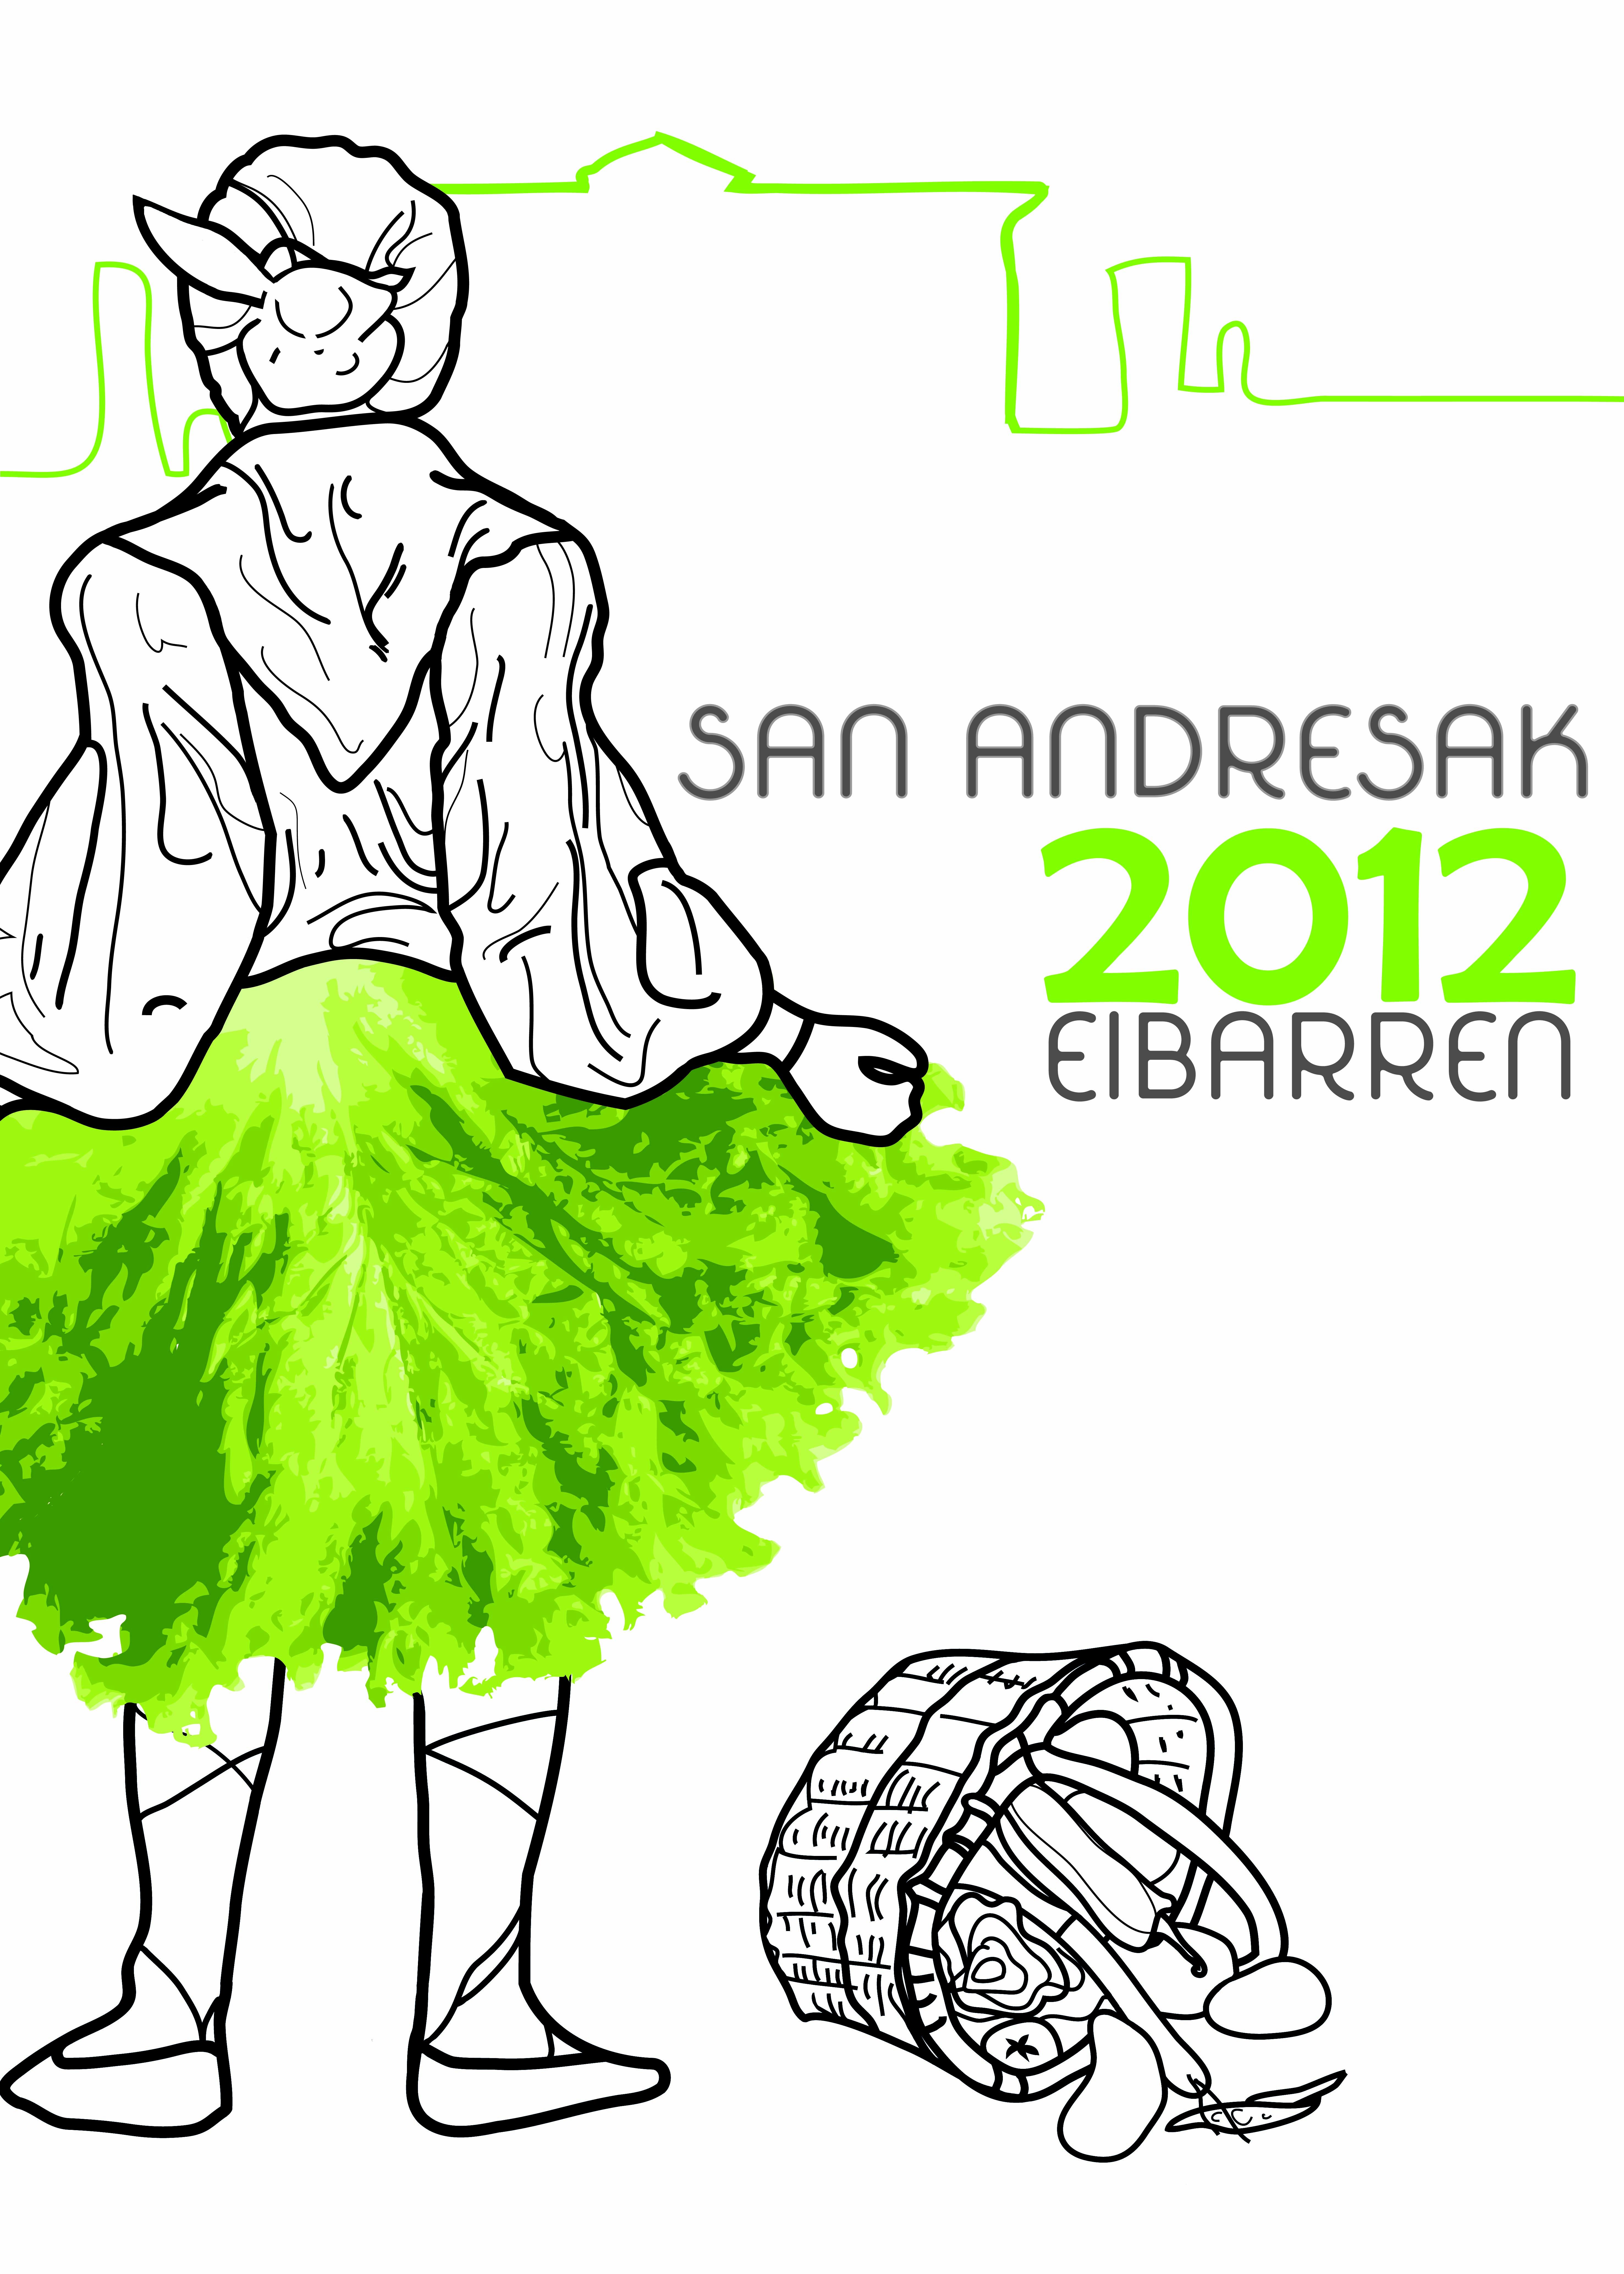 Fallo del concurso de cartel " Sanandresak 2012 Eibarren" 